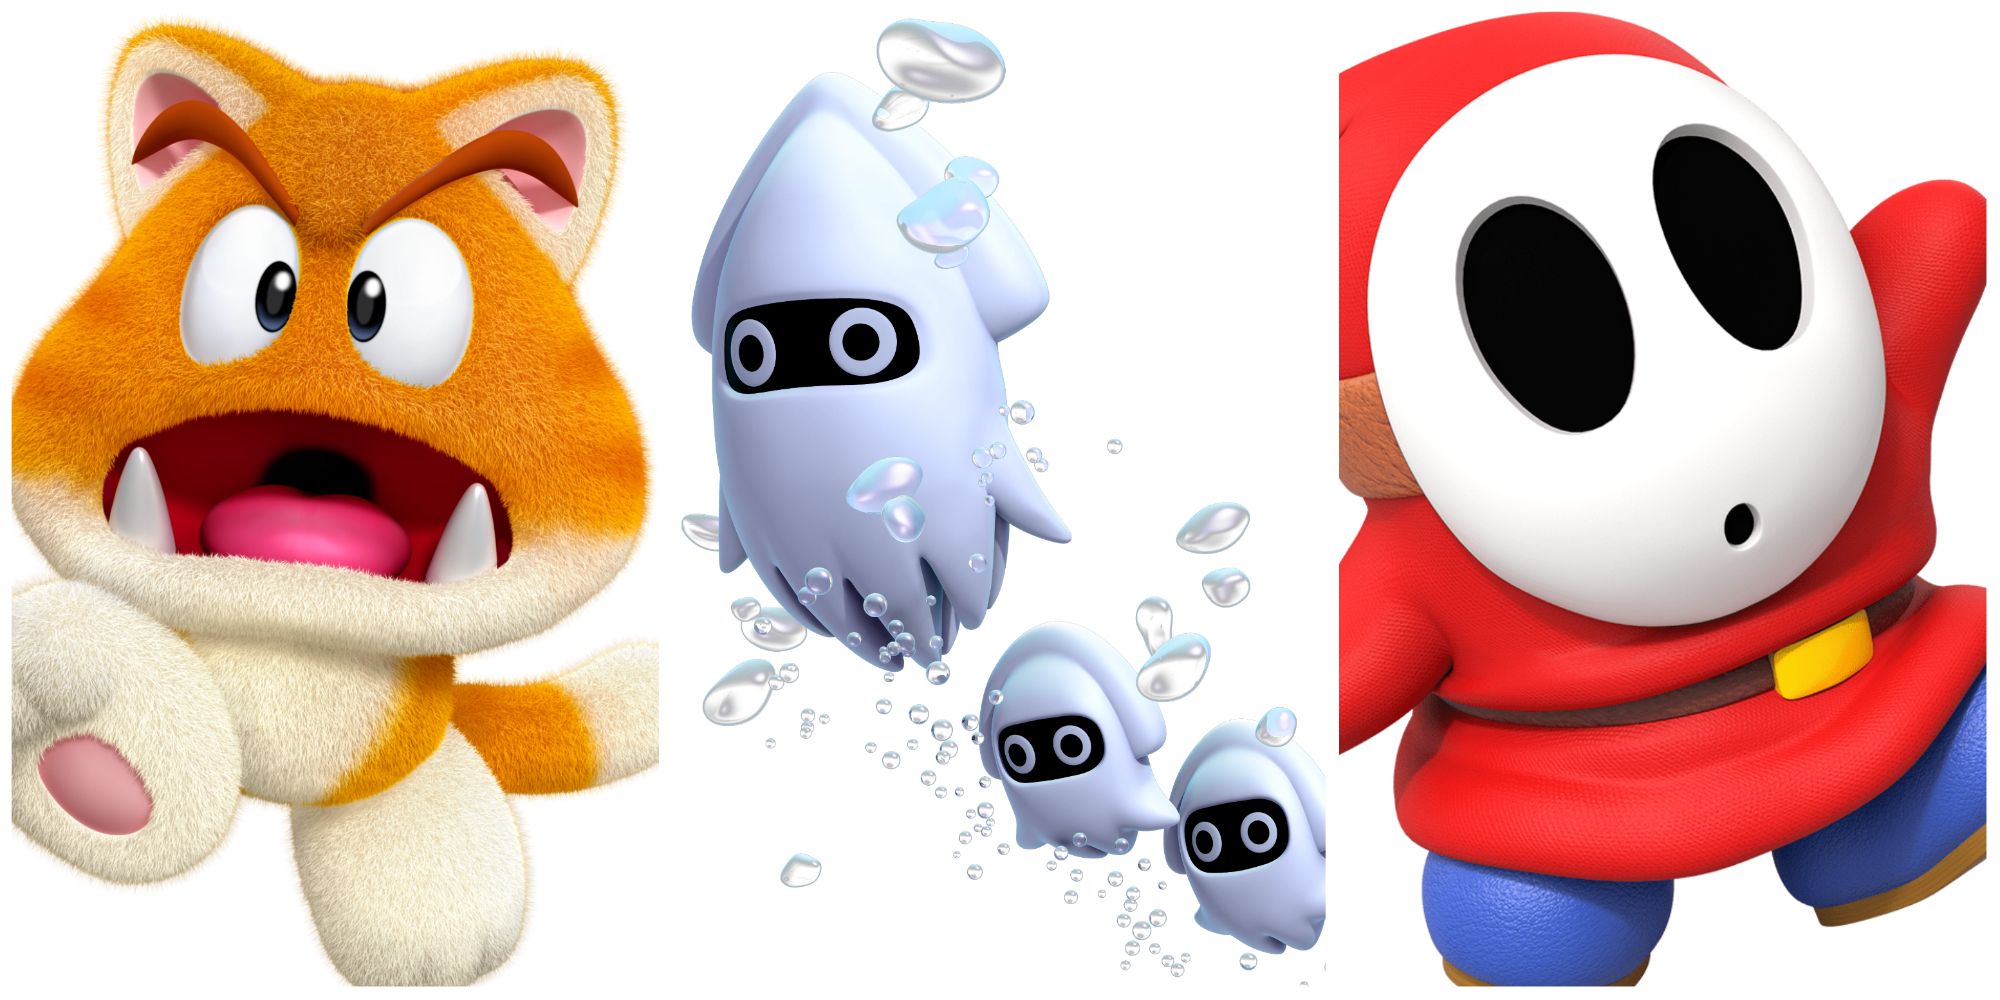 Cutest Enemies In Super Mario Bros - Cat Goomba, Blooper, Shy Guy